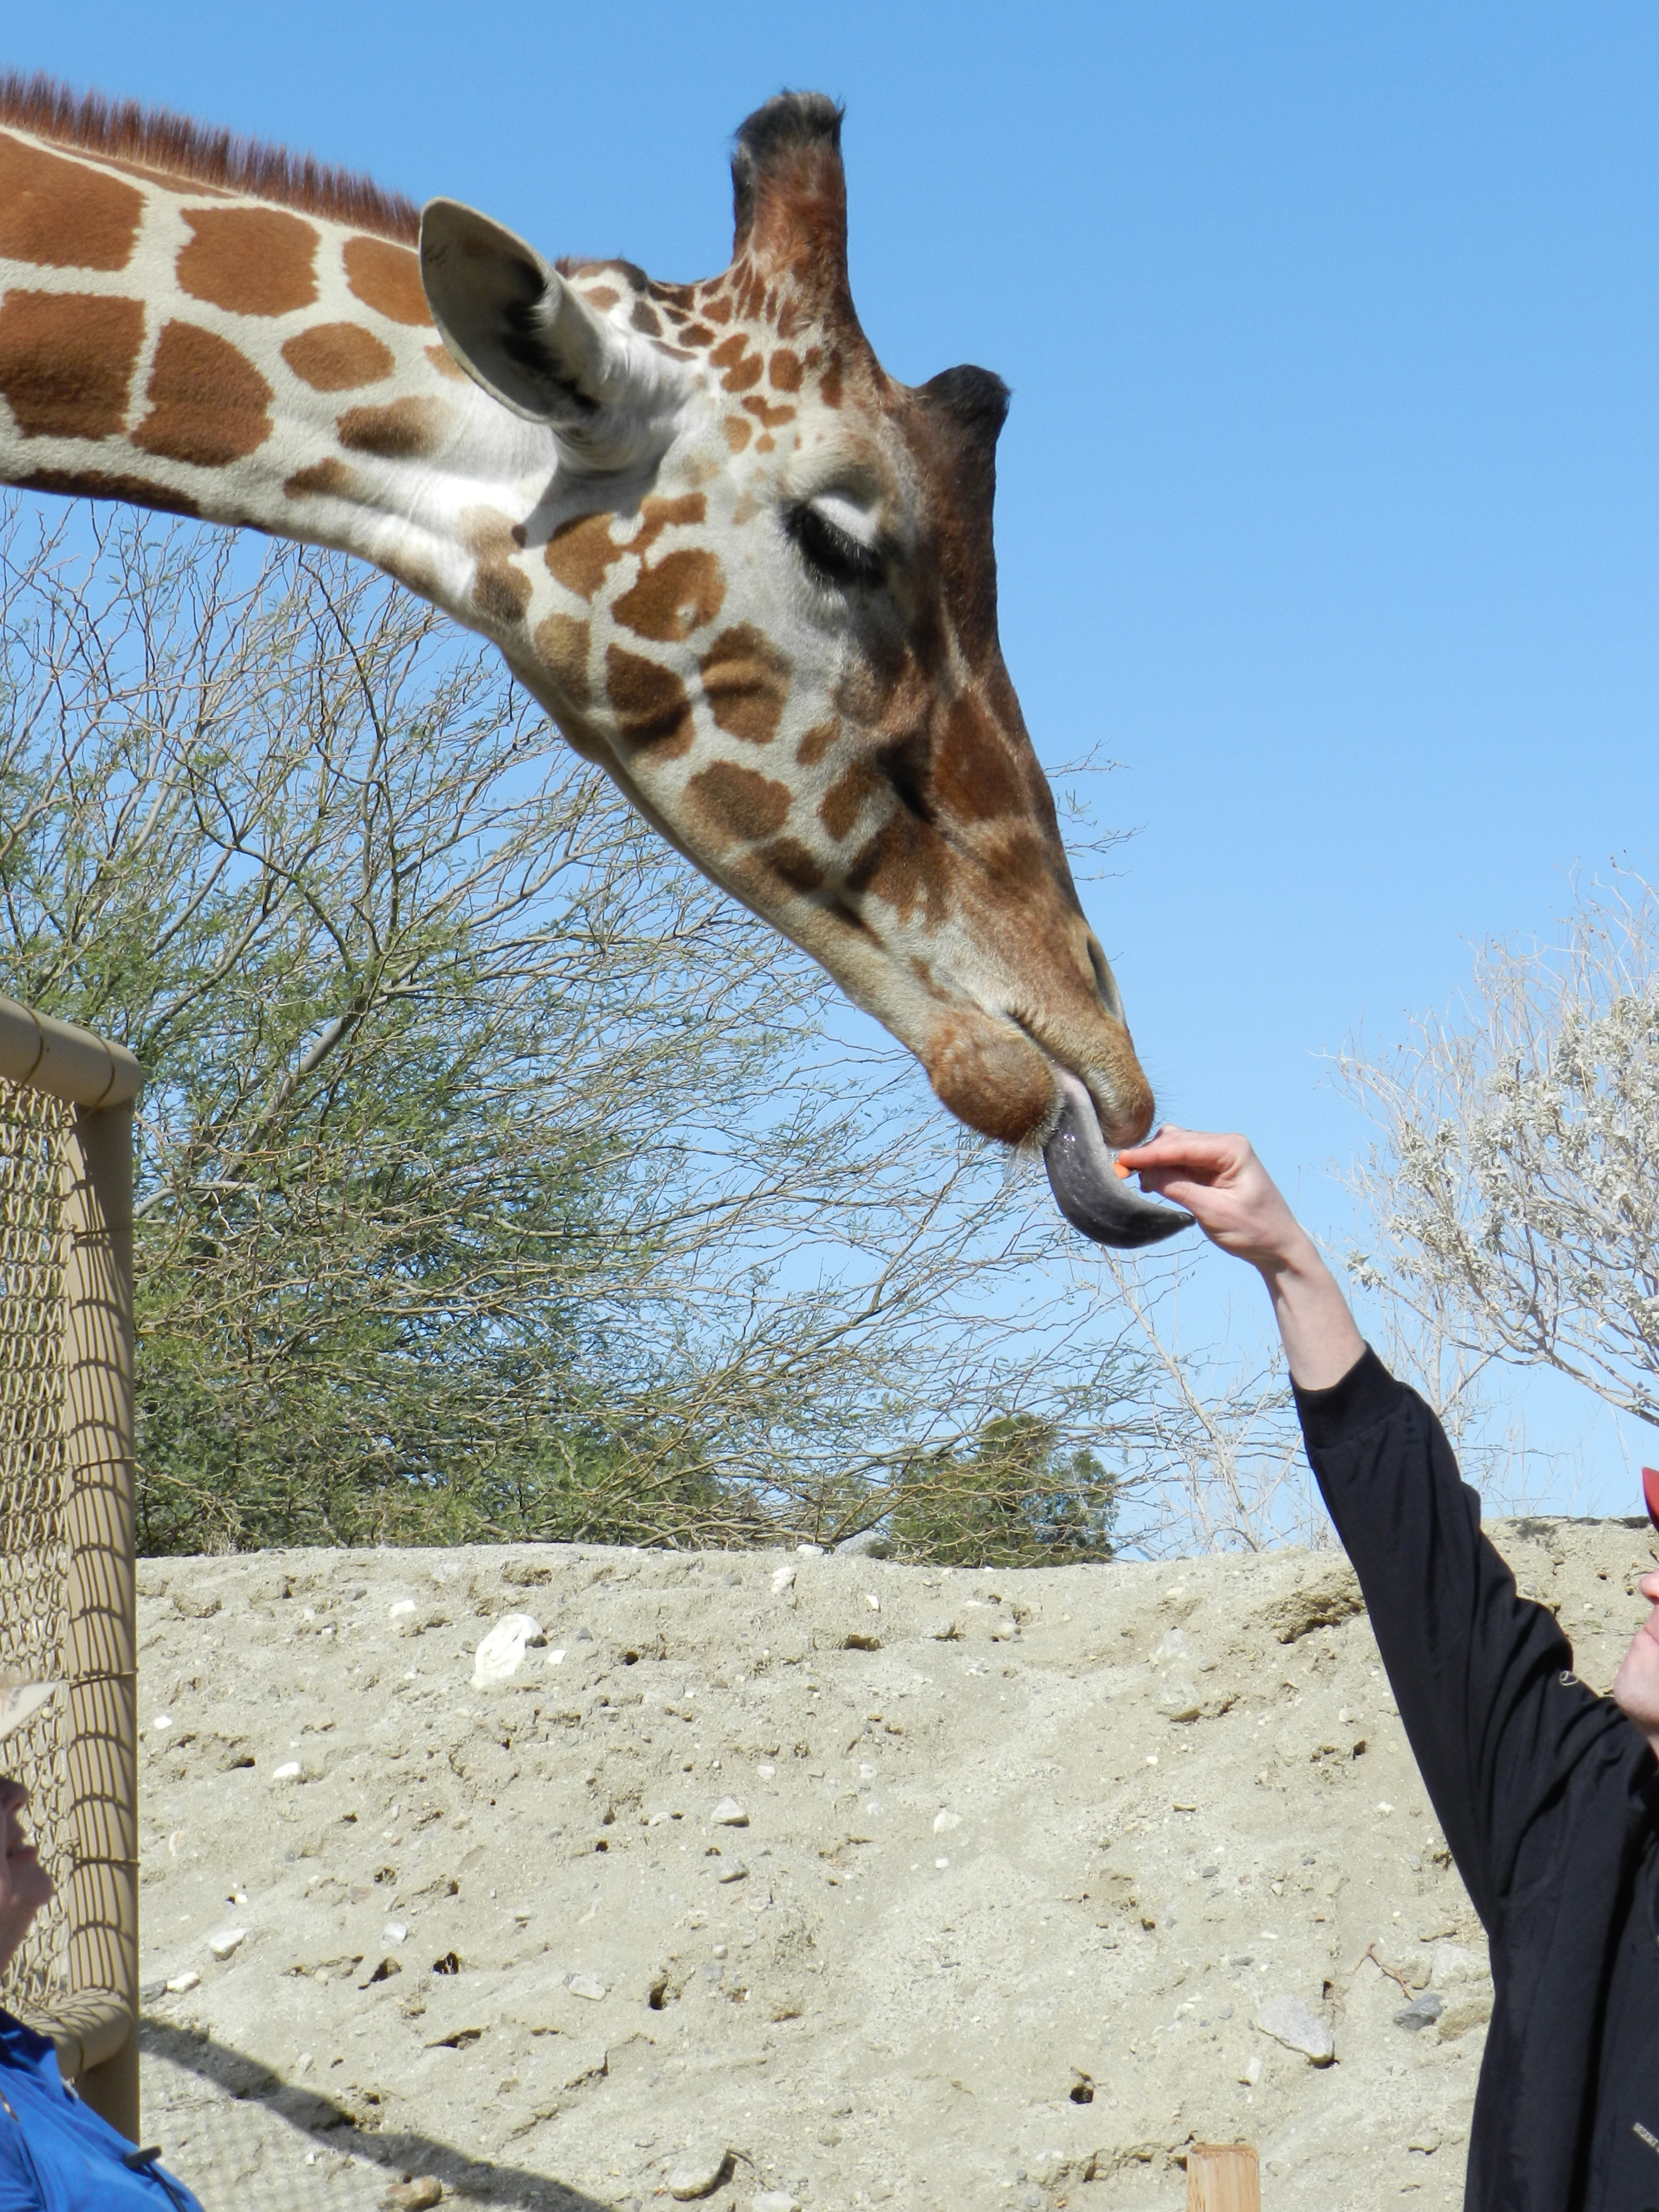 Feeding a Giraffe | PSP - I love you.